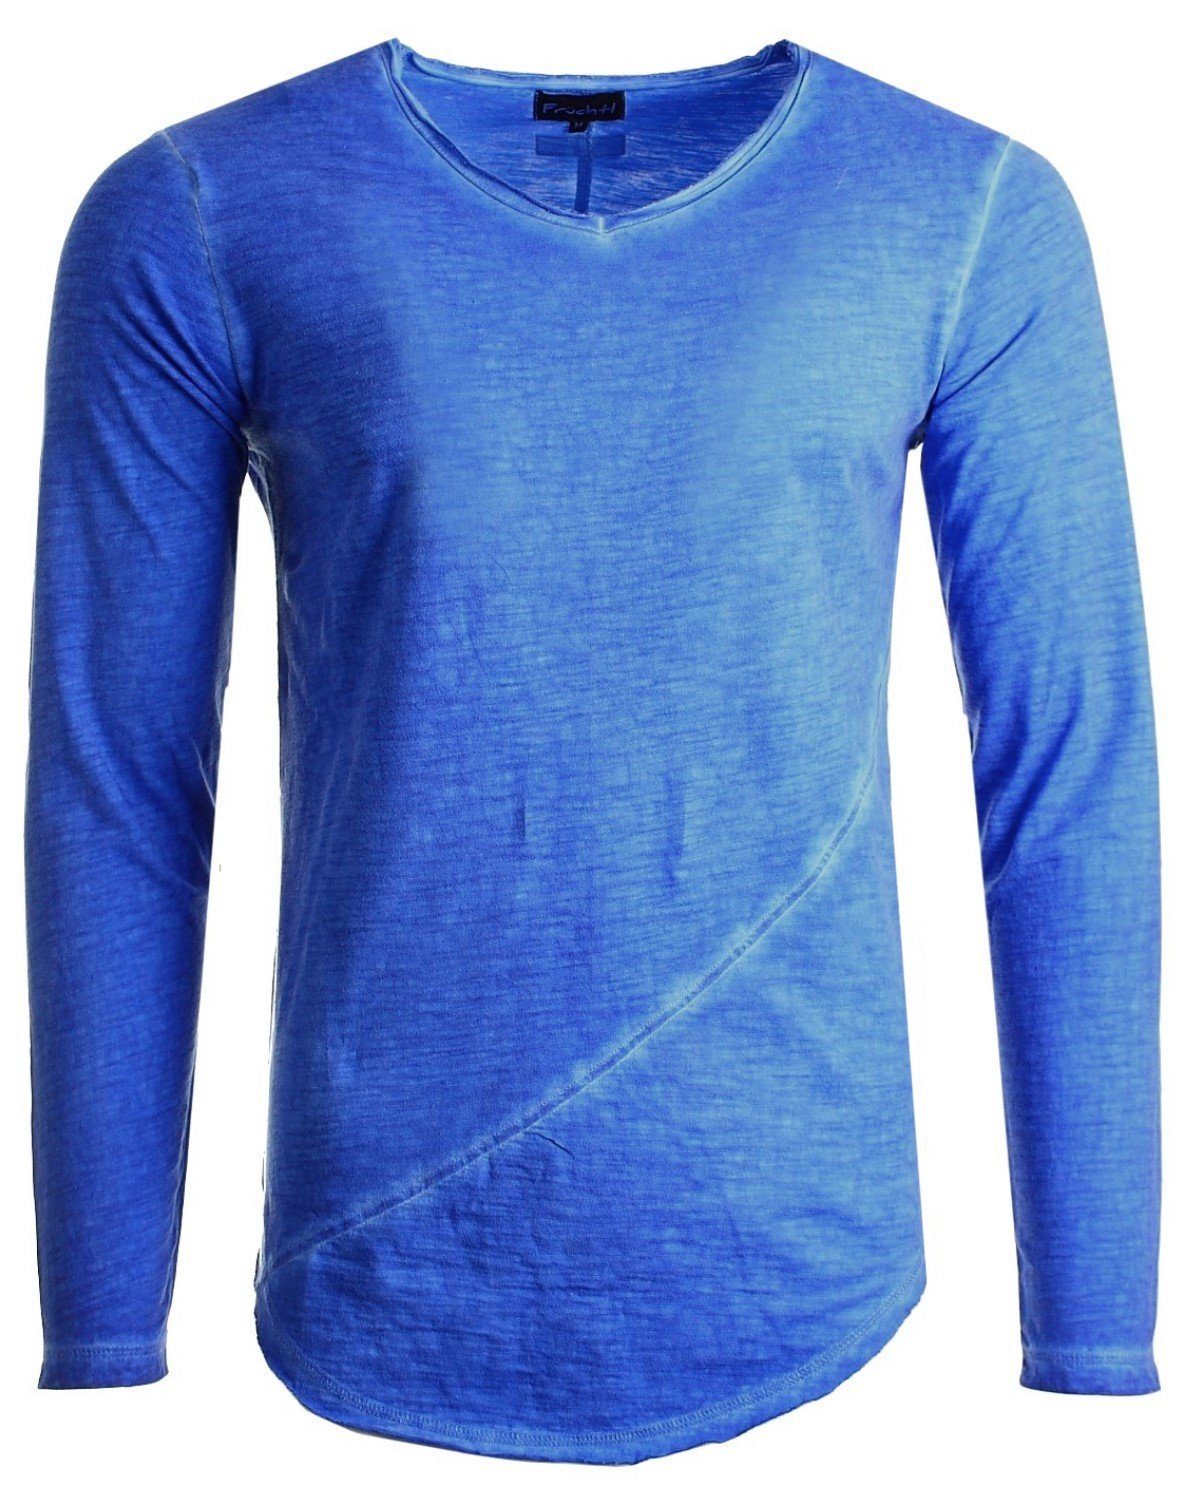 Waschung Longshirt Vintage blau Longsleeve Früchtl Langarmshirt mit